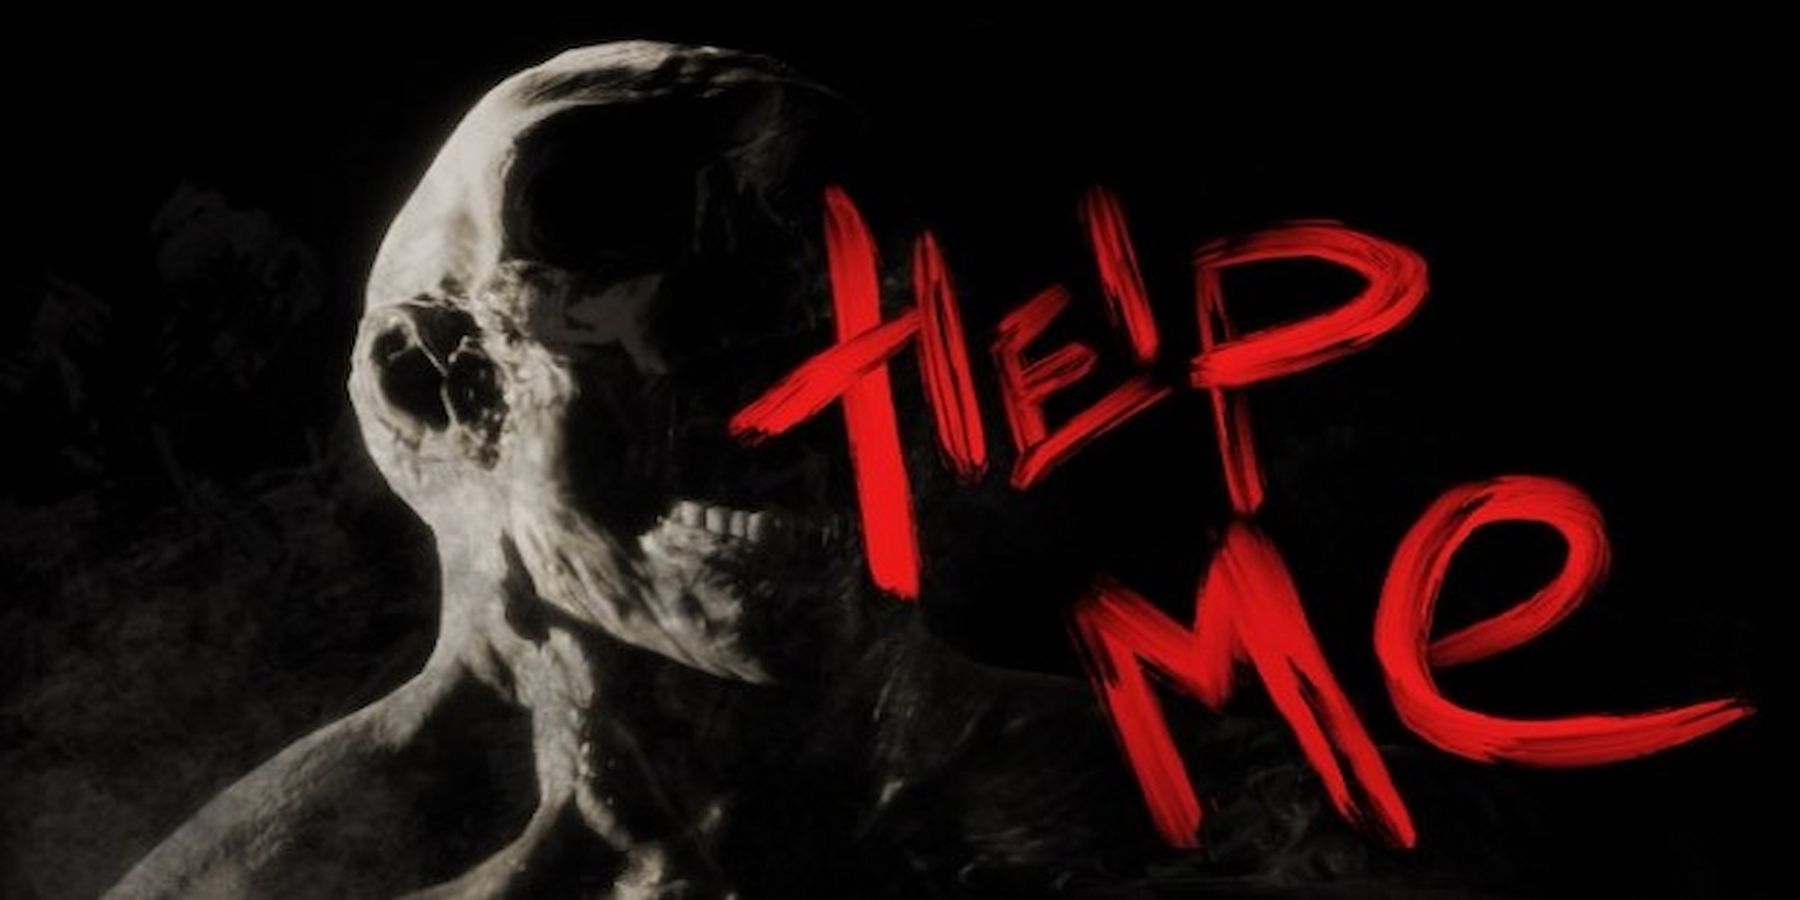 Creepy First-Person Horror Game Help Me Seeking Funding on Kickstarter